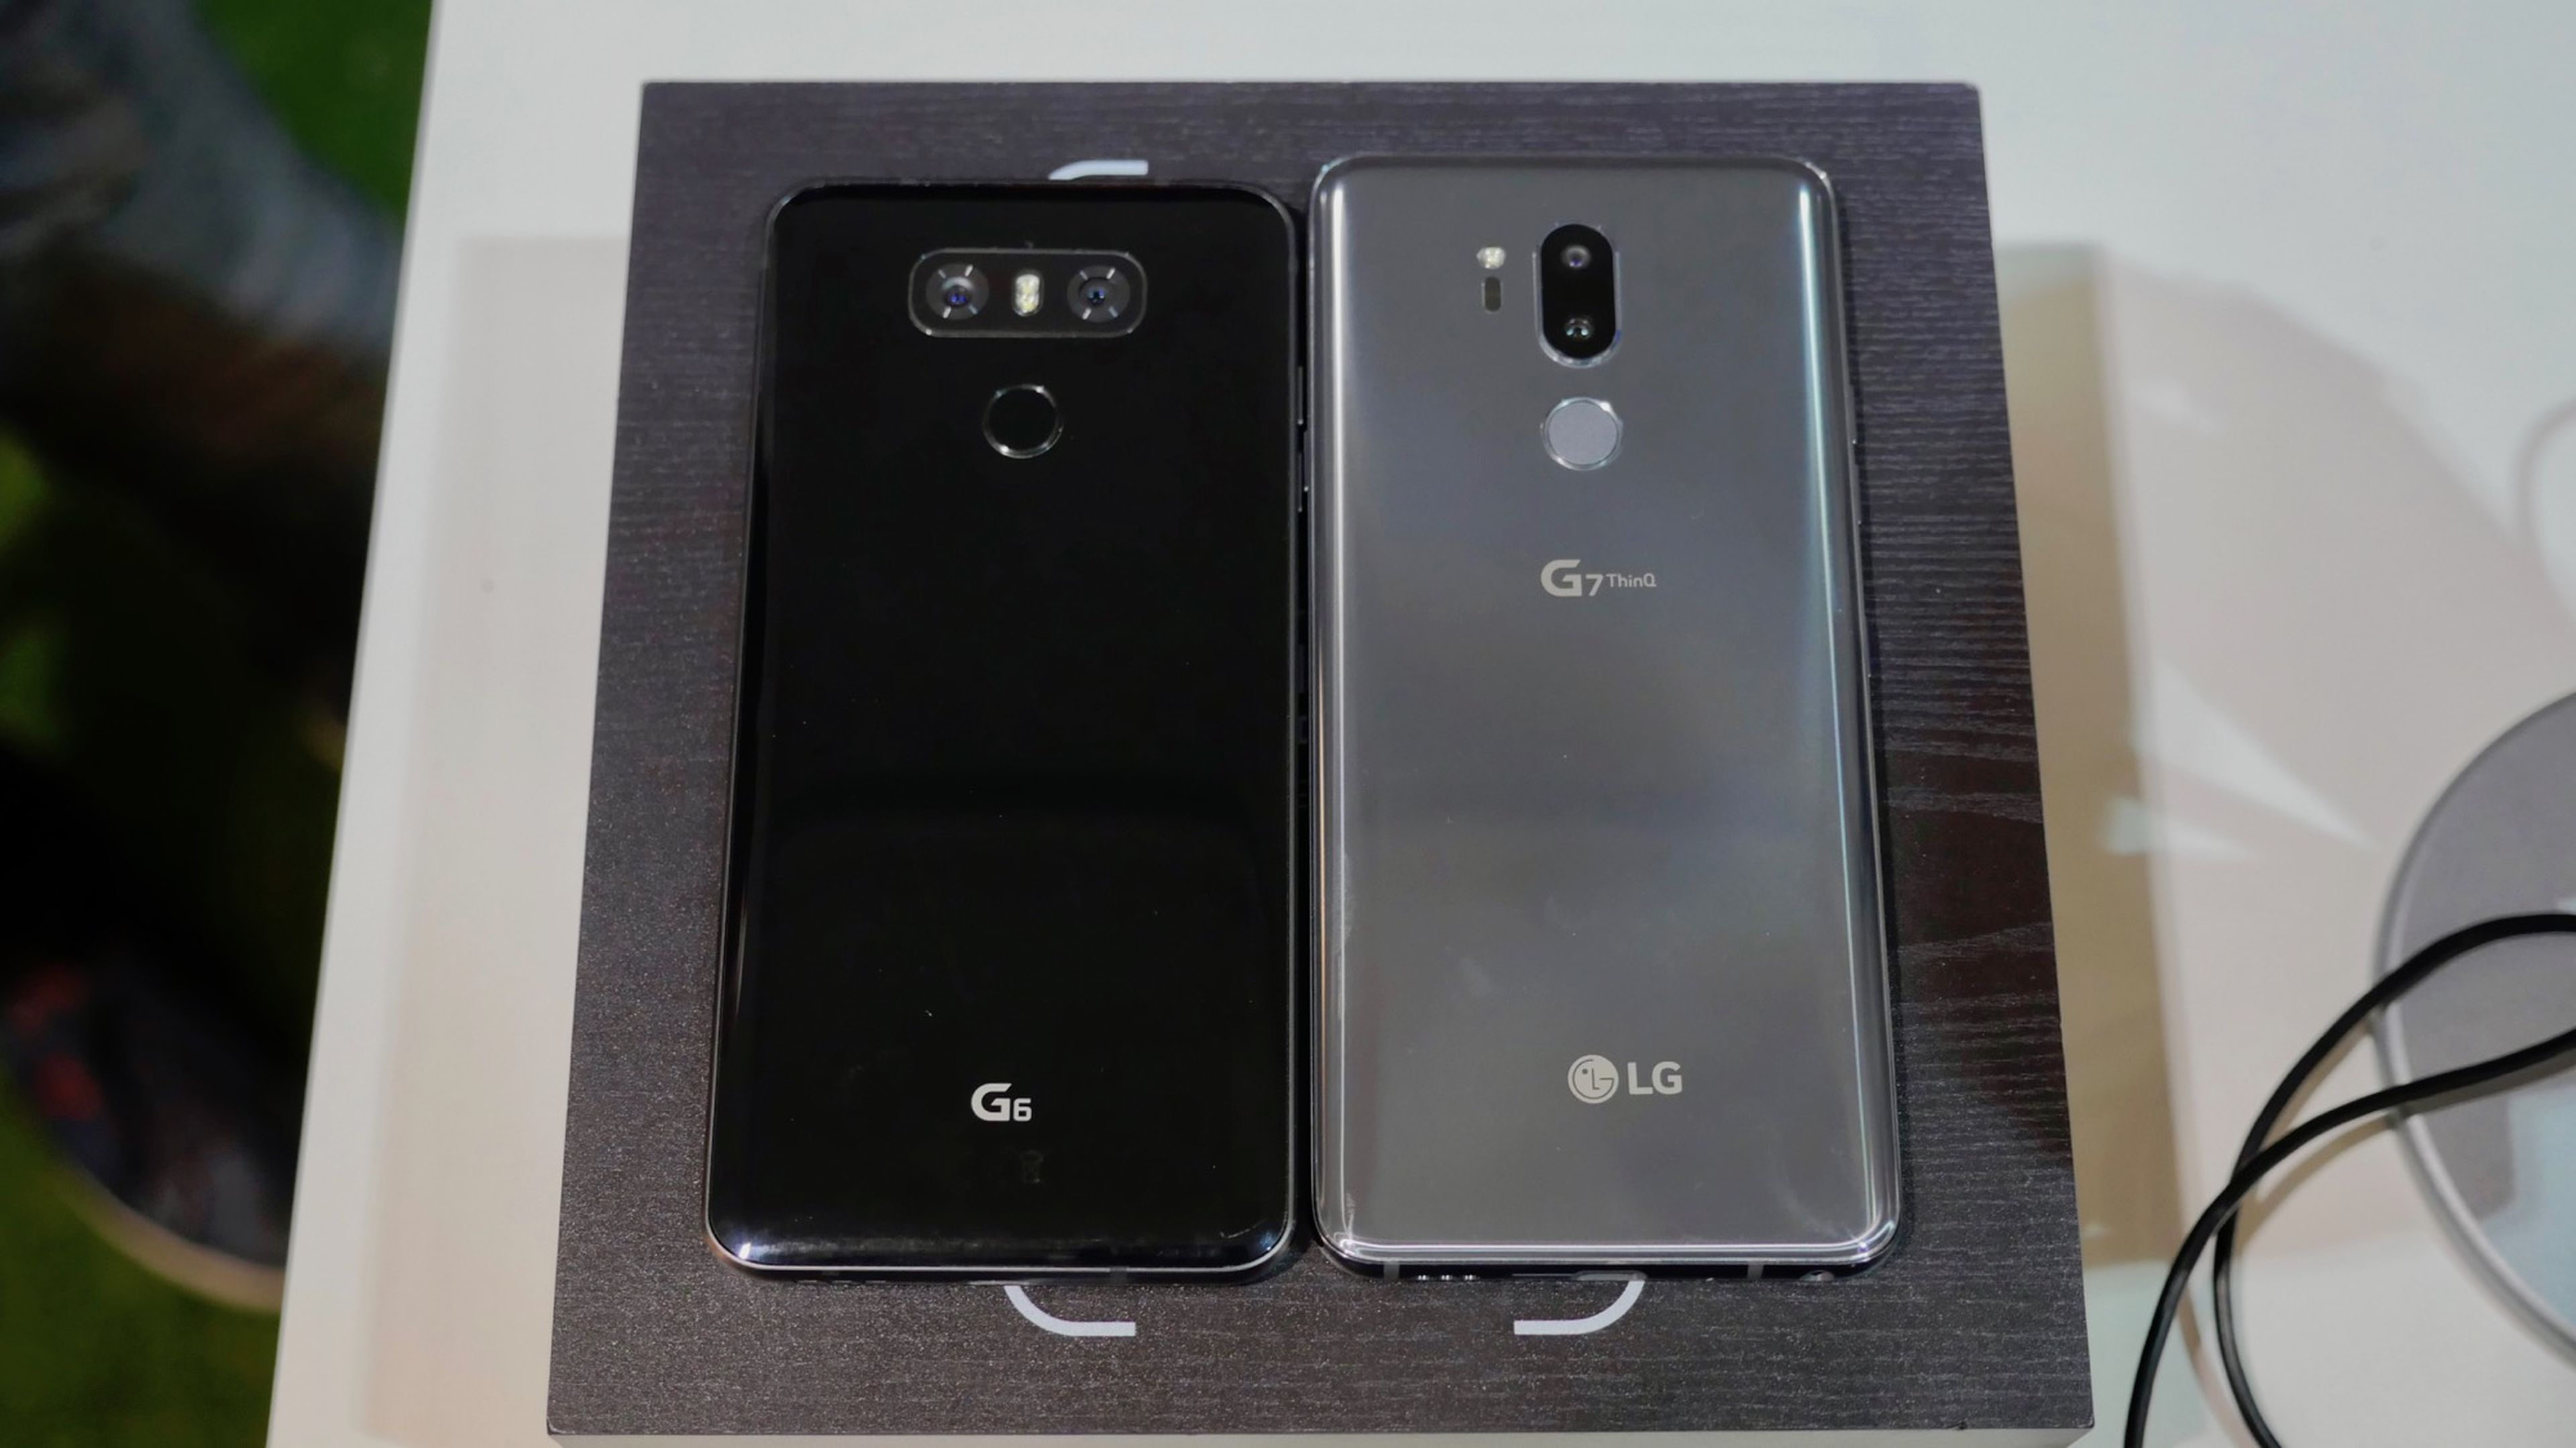 LG G6 vs LG G7